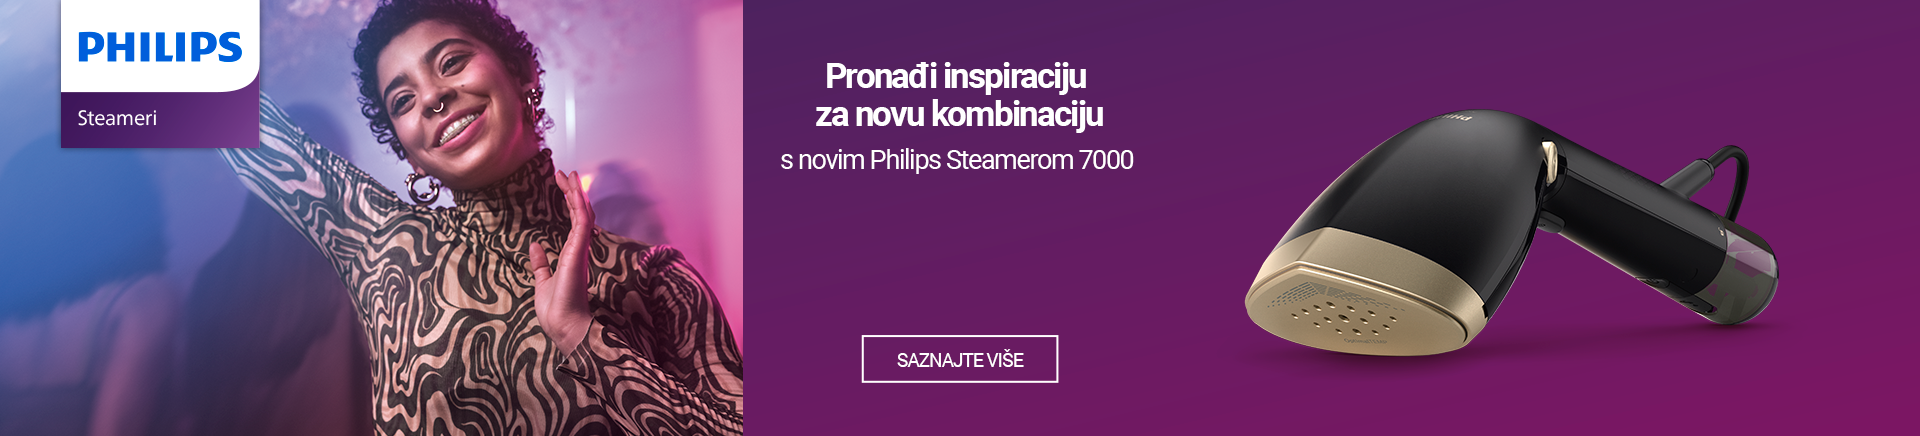 Philips steamer 7000